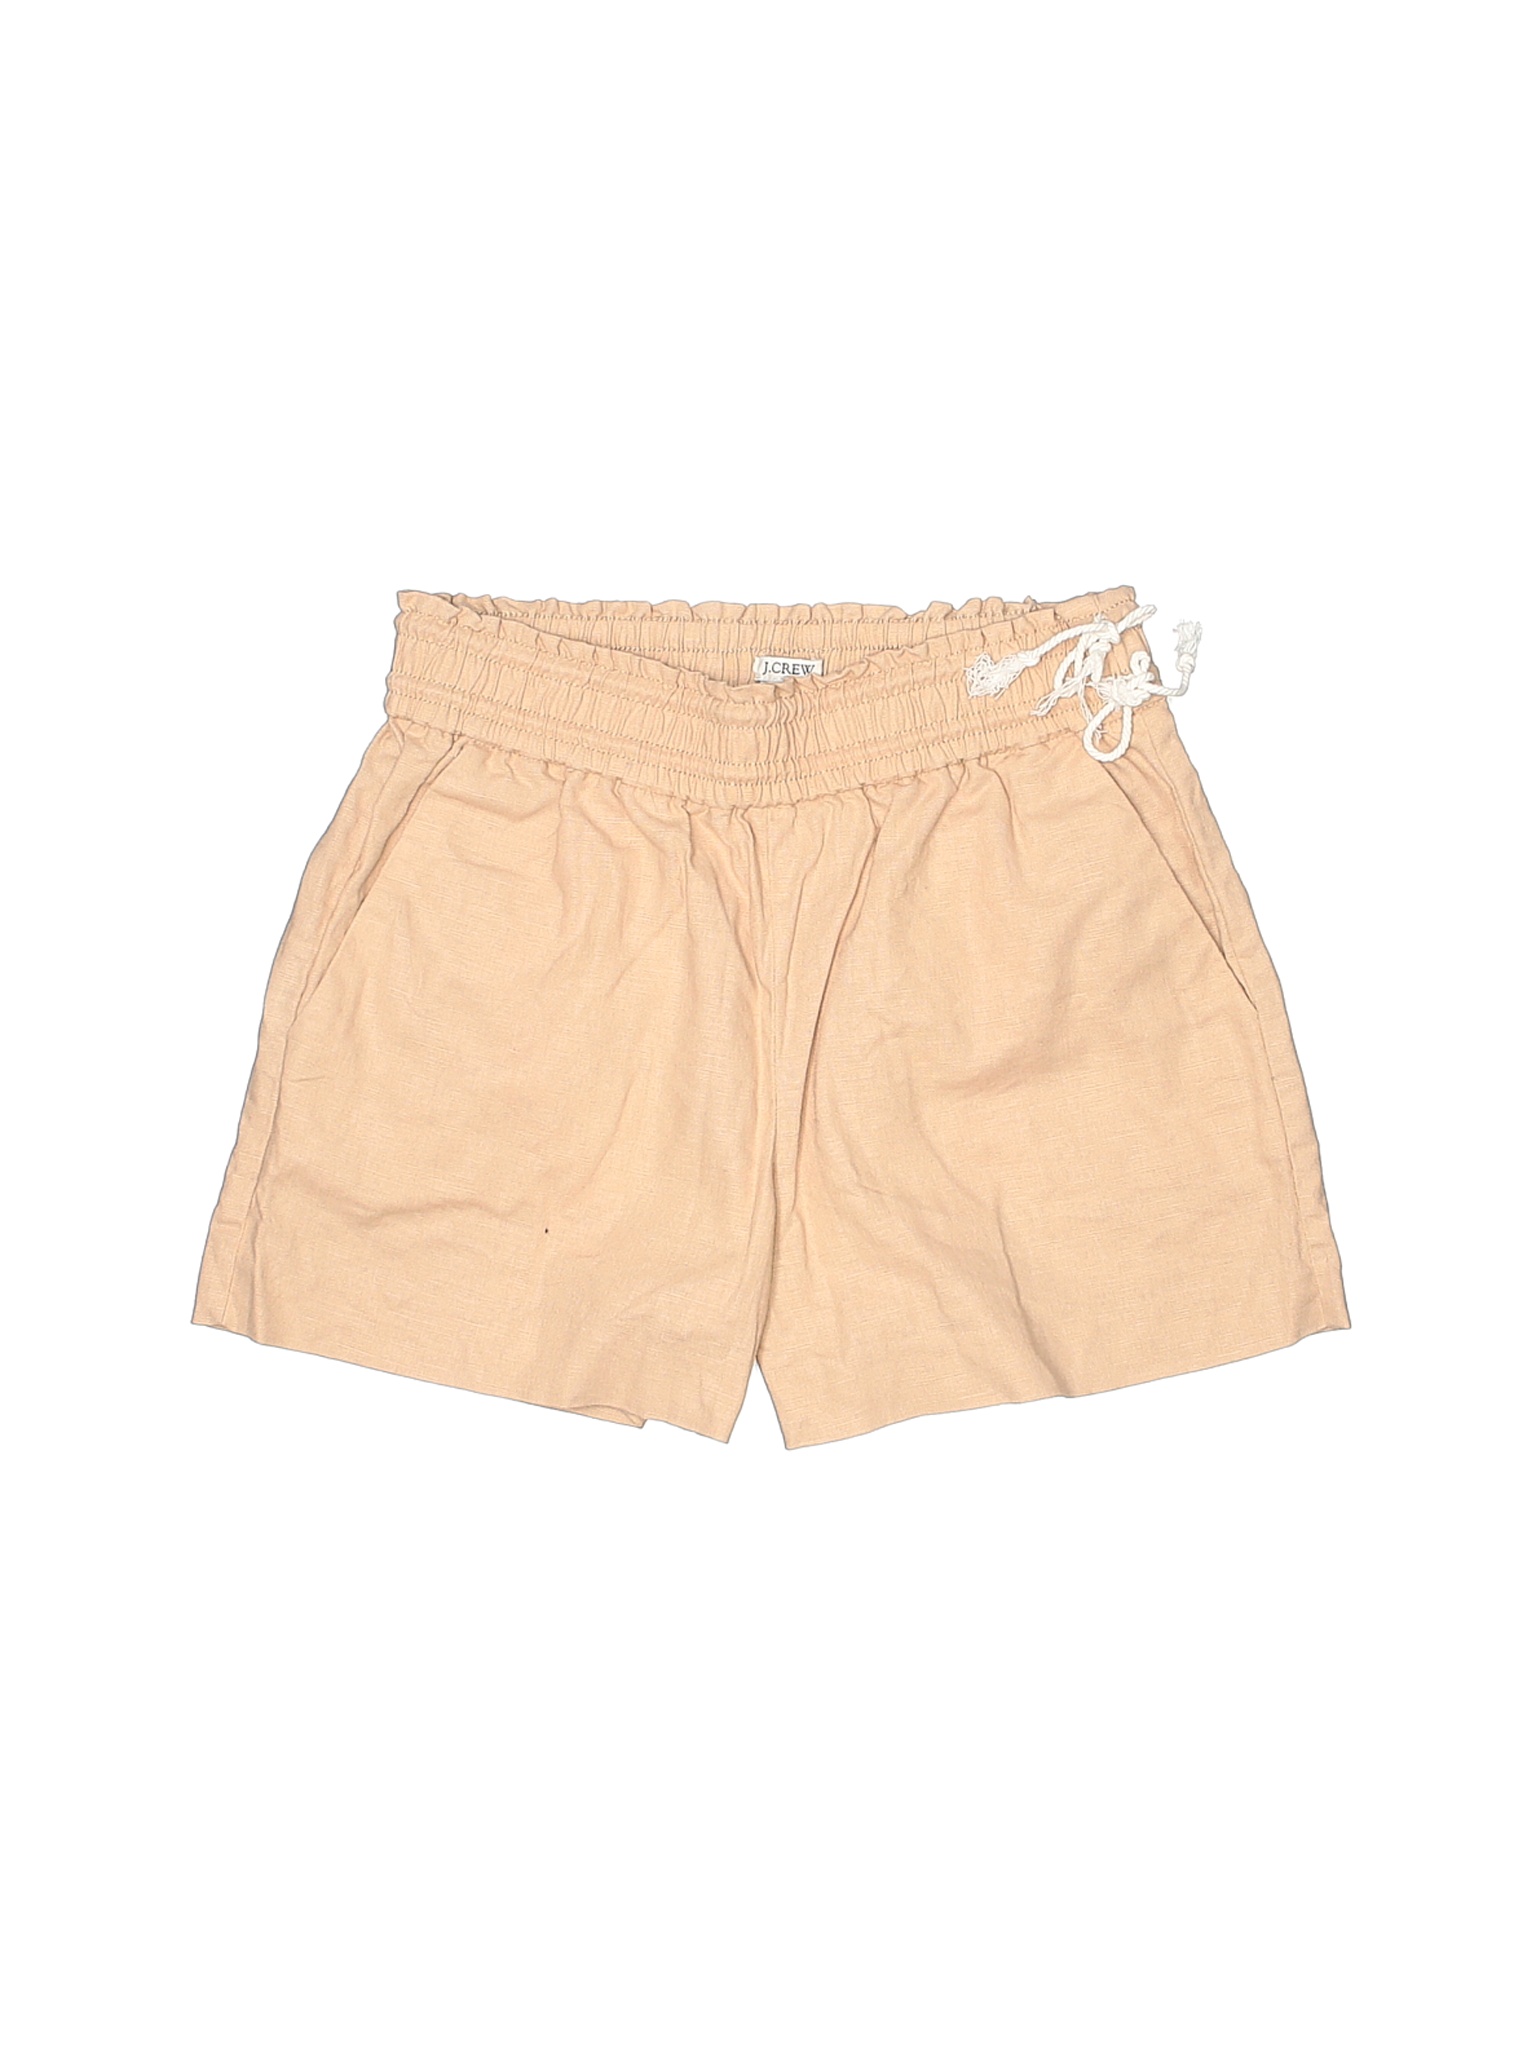 J.Crew Factory Store Solid Tan Khaki Shorts Size XXS - 87% off | thredUP